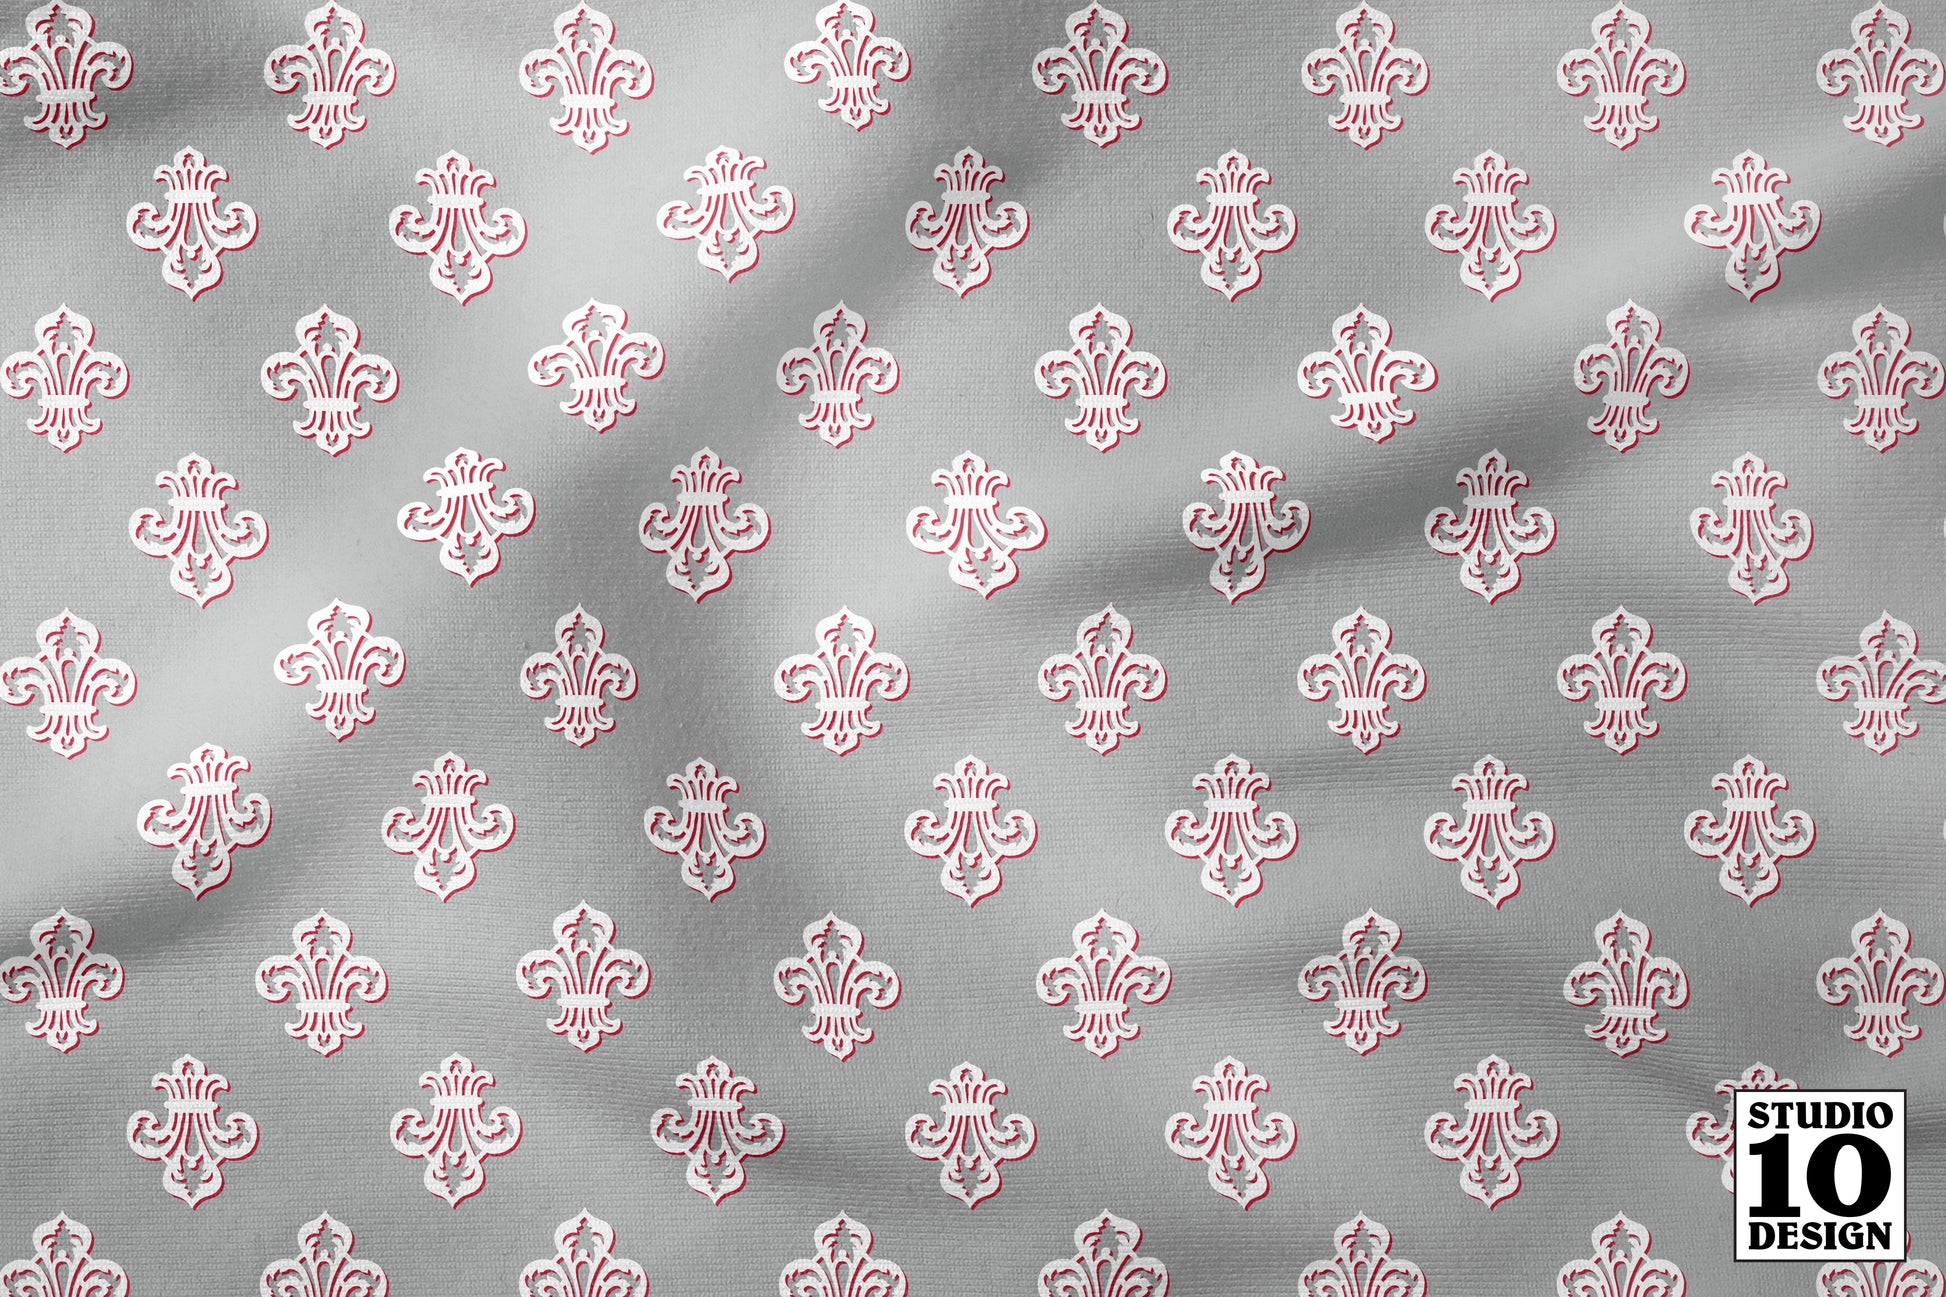 Fleur de Lis (Grey, White, Red) Printed Fabric by Studio Ten Design